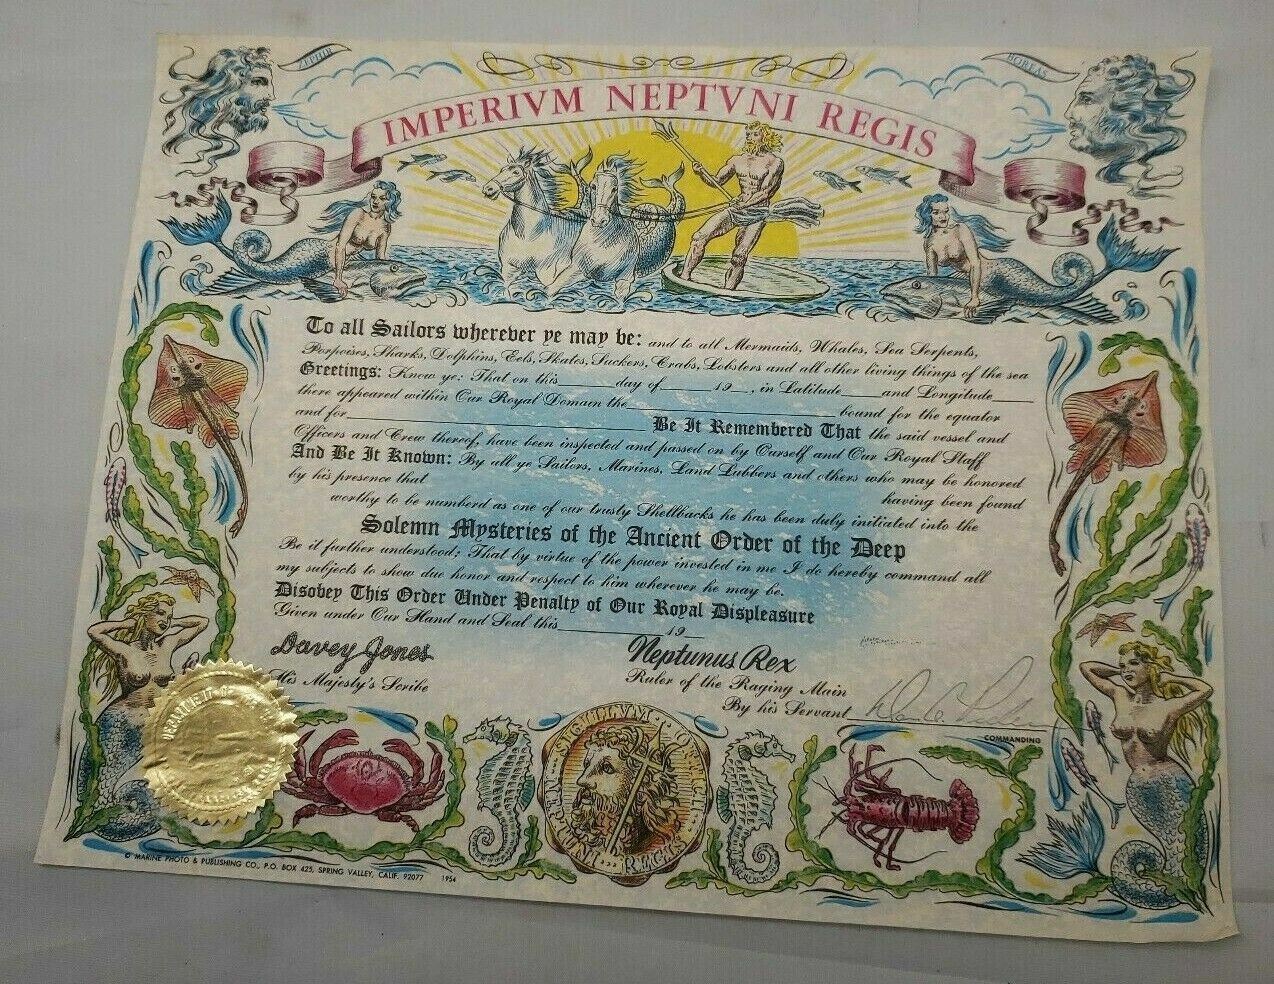 Imperivm Neptvni Regis 1954 Equator Crossing Certificate Blank & excellent shape